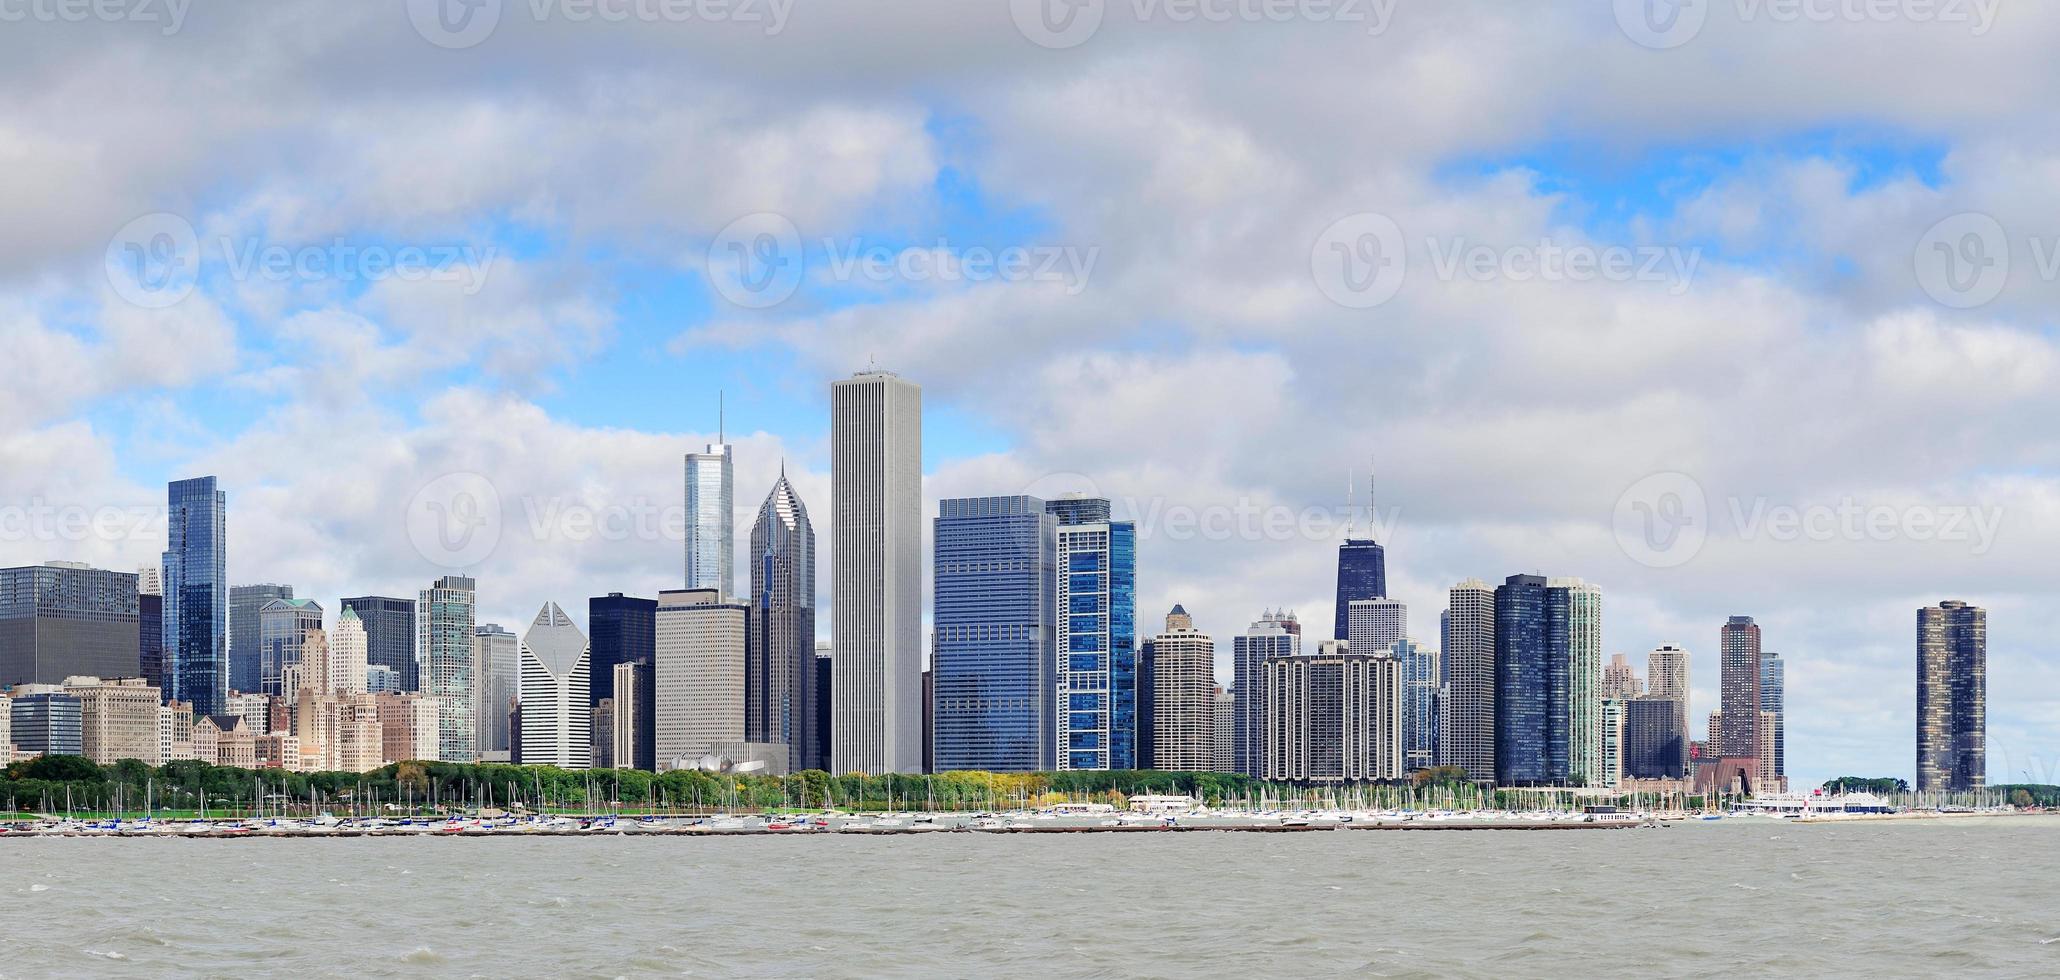 Chicago skyline panorama foto